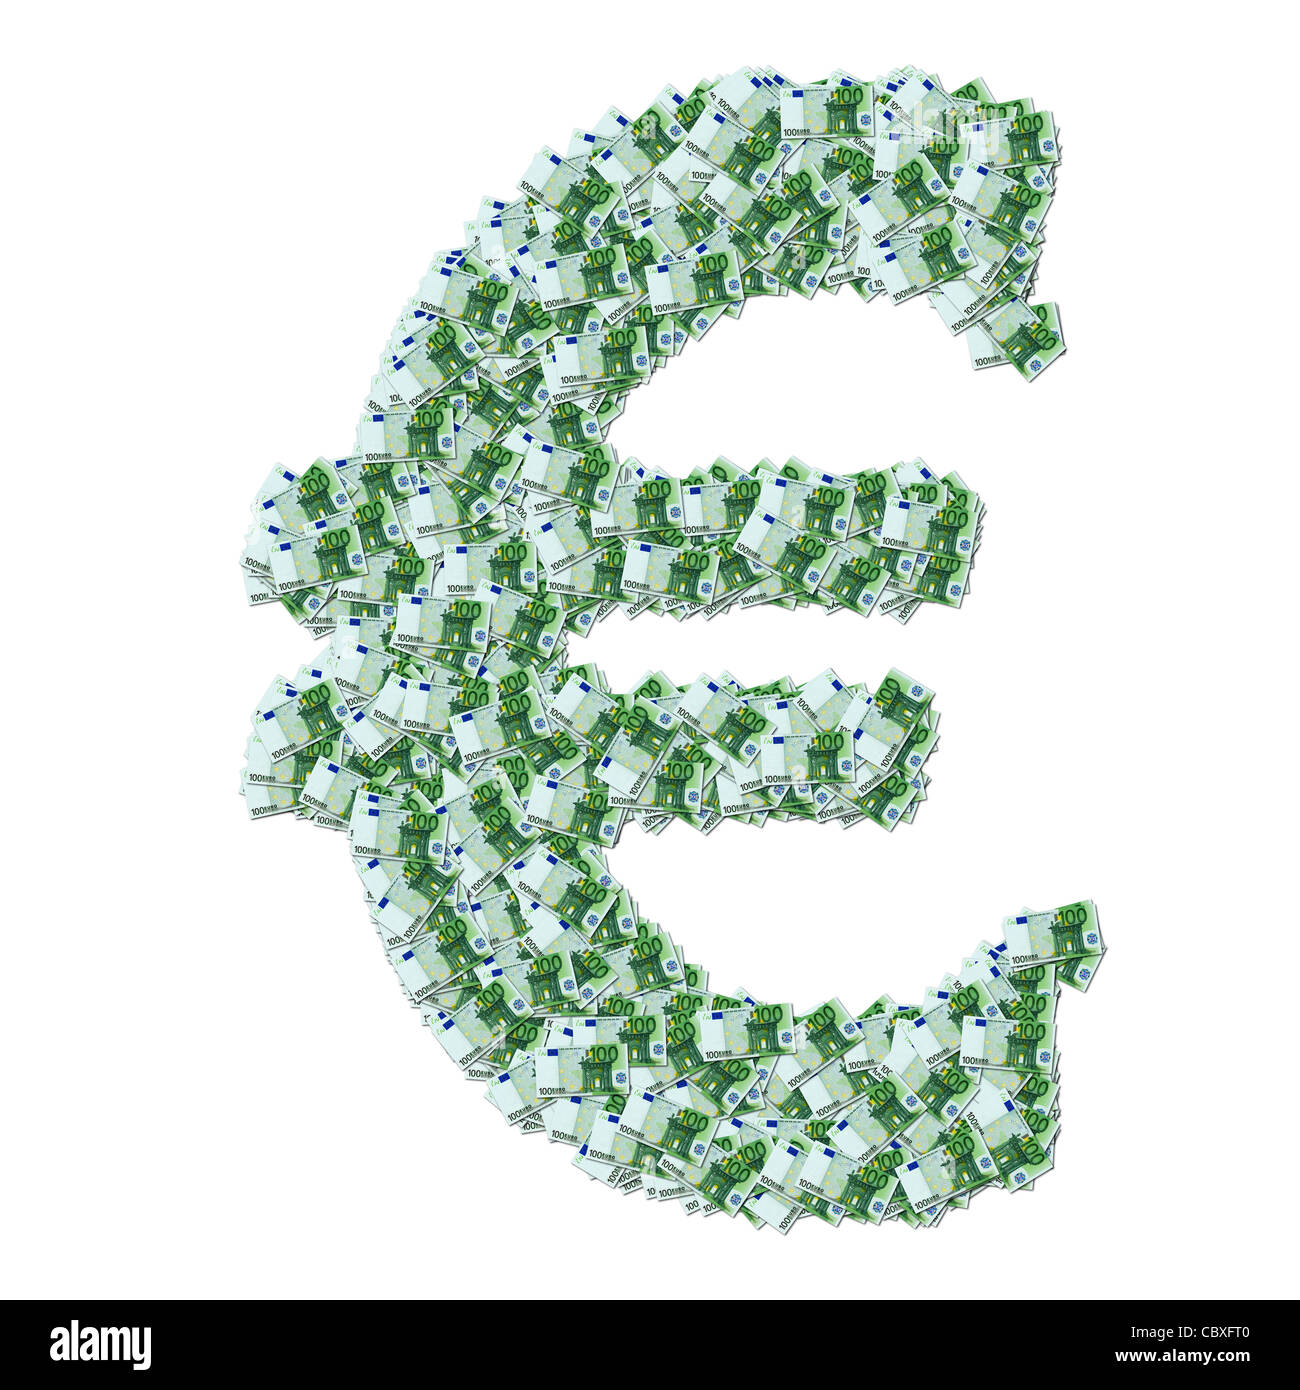 Das Euro-Symbol mit 100 Euro Banknoten hergestellt.  Symbole € Composé À Partir de Karten de Banque de 100 Euro. Stockfoto